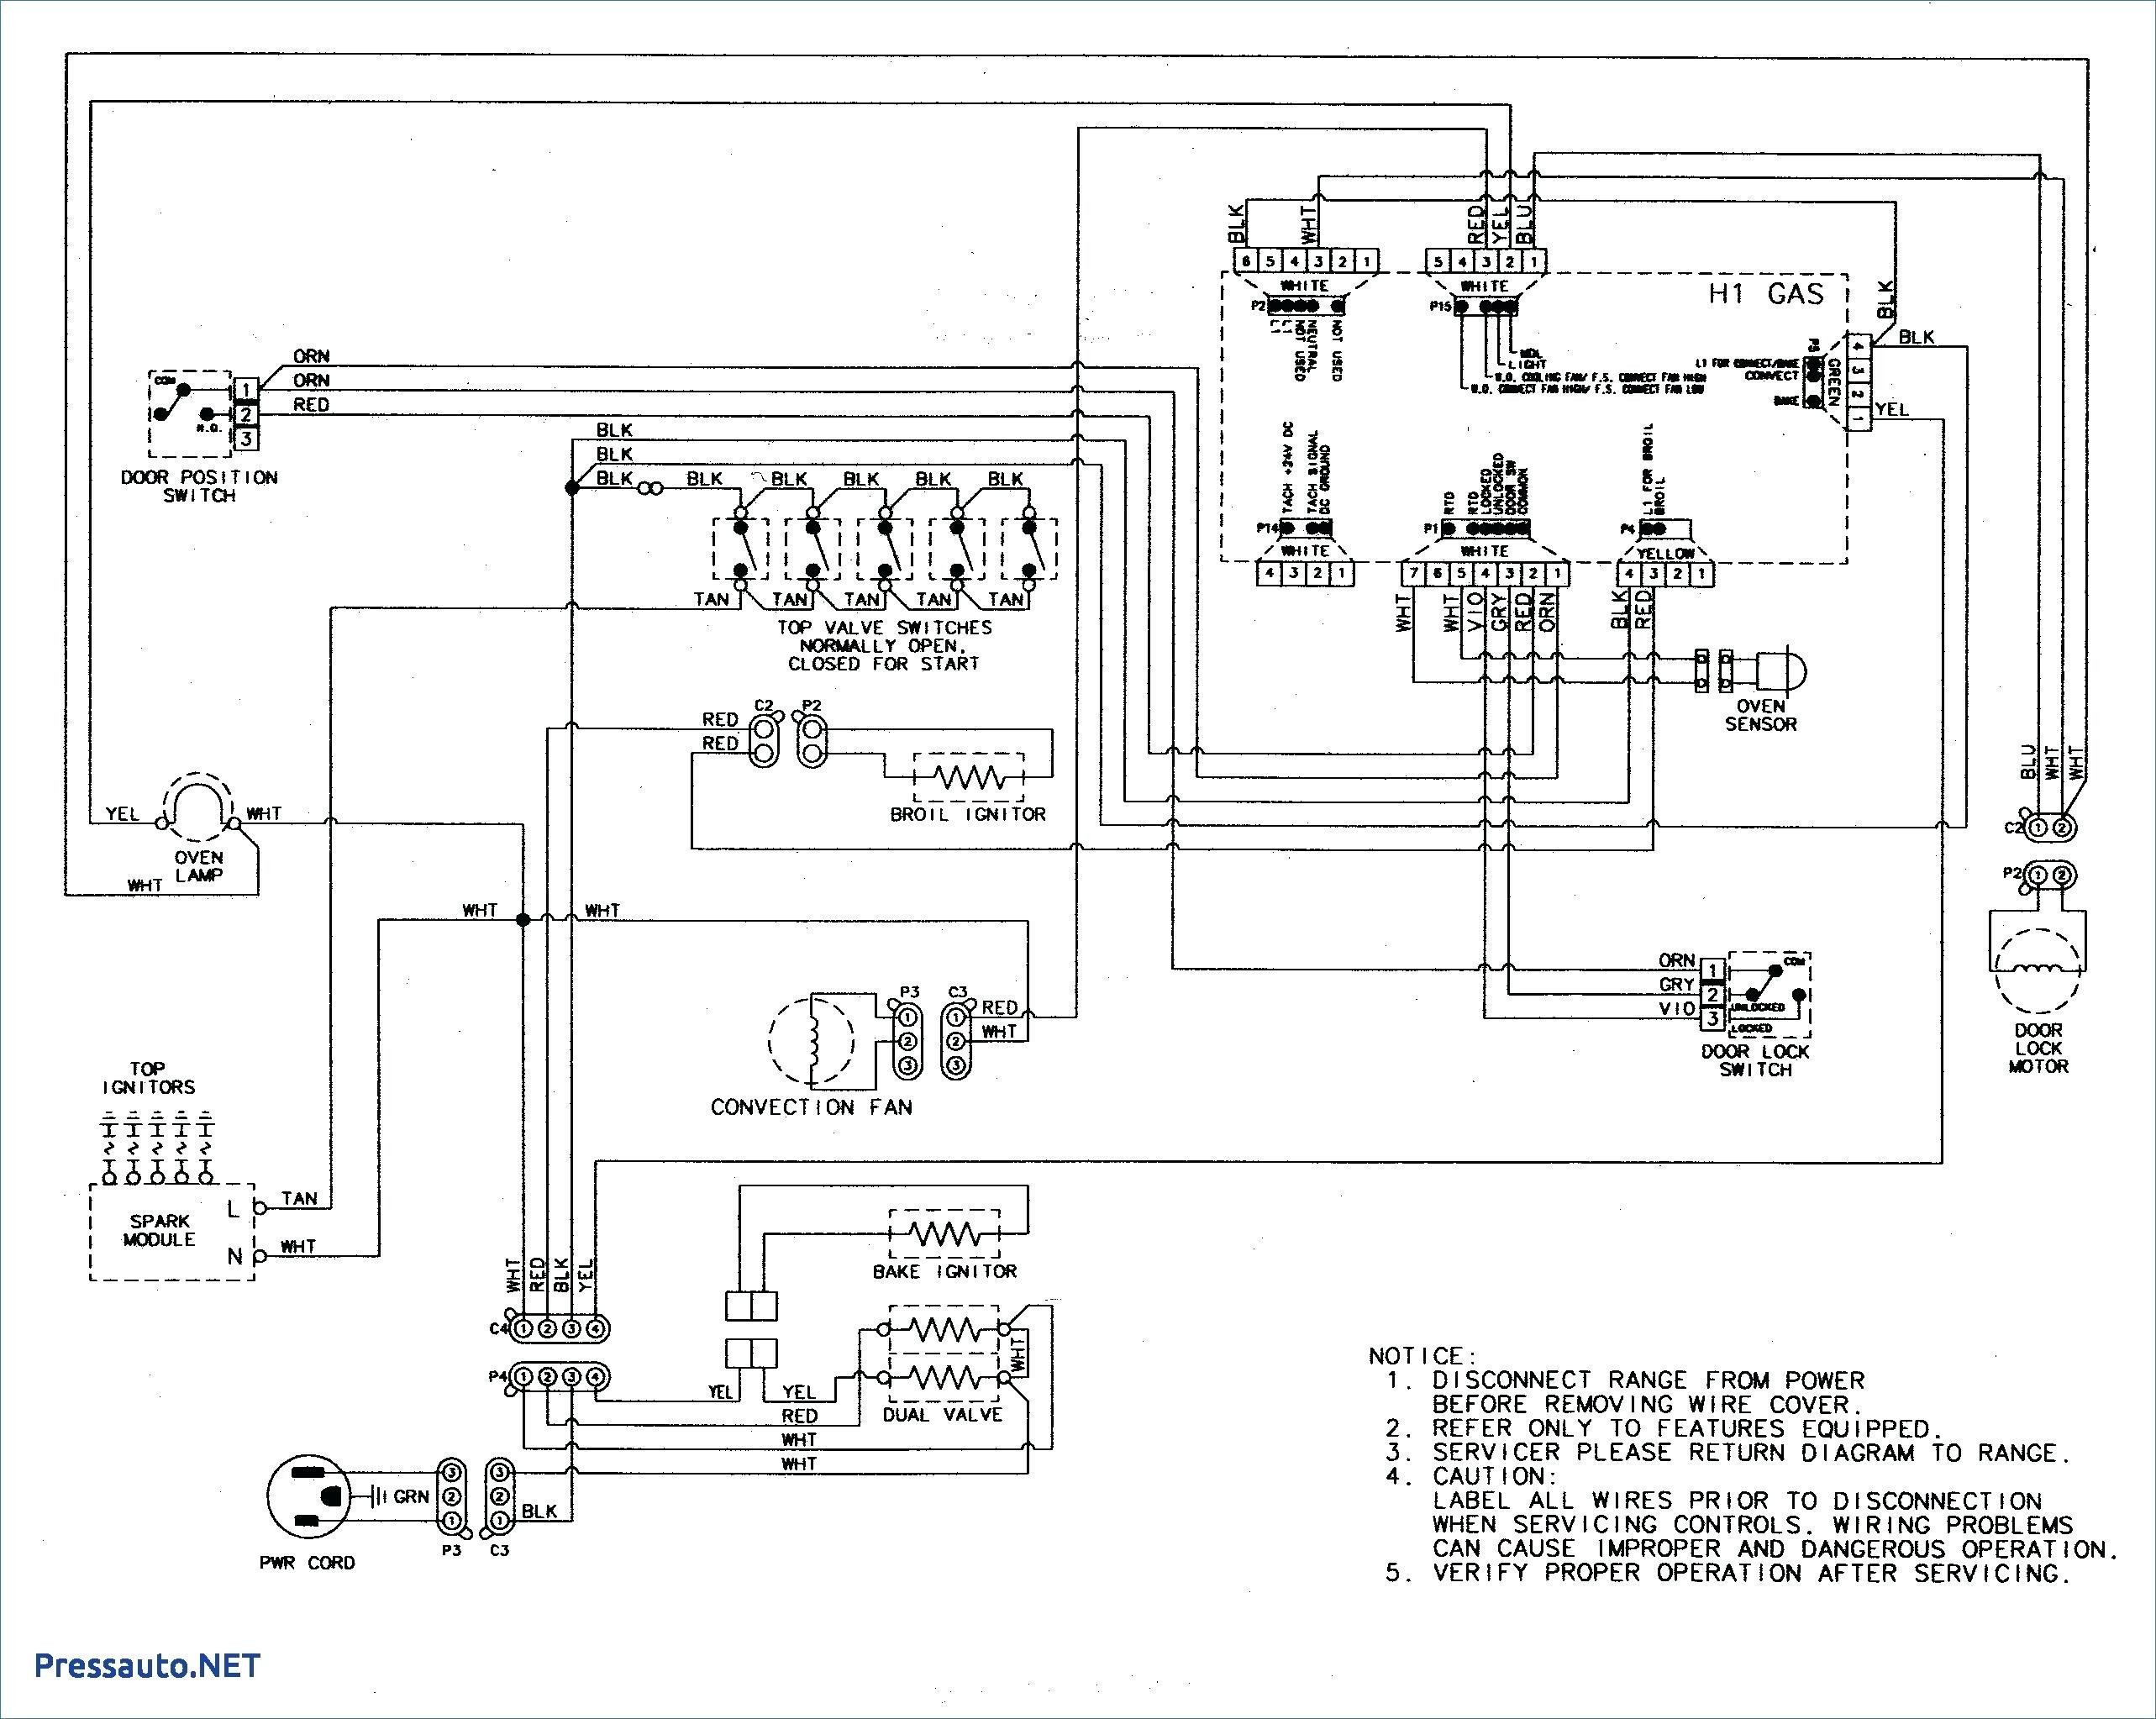 Auto Air Conditioning Wiring Diagram from detoxicrecenze.com